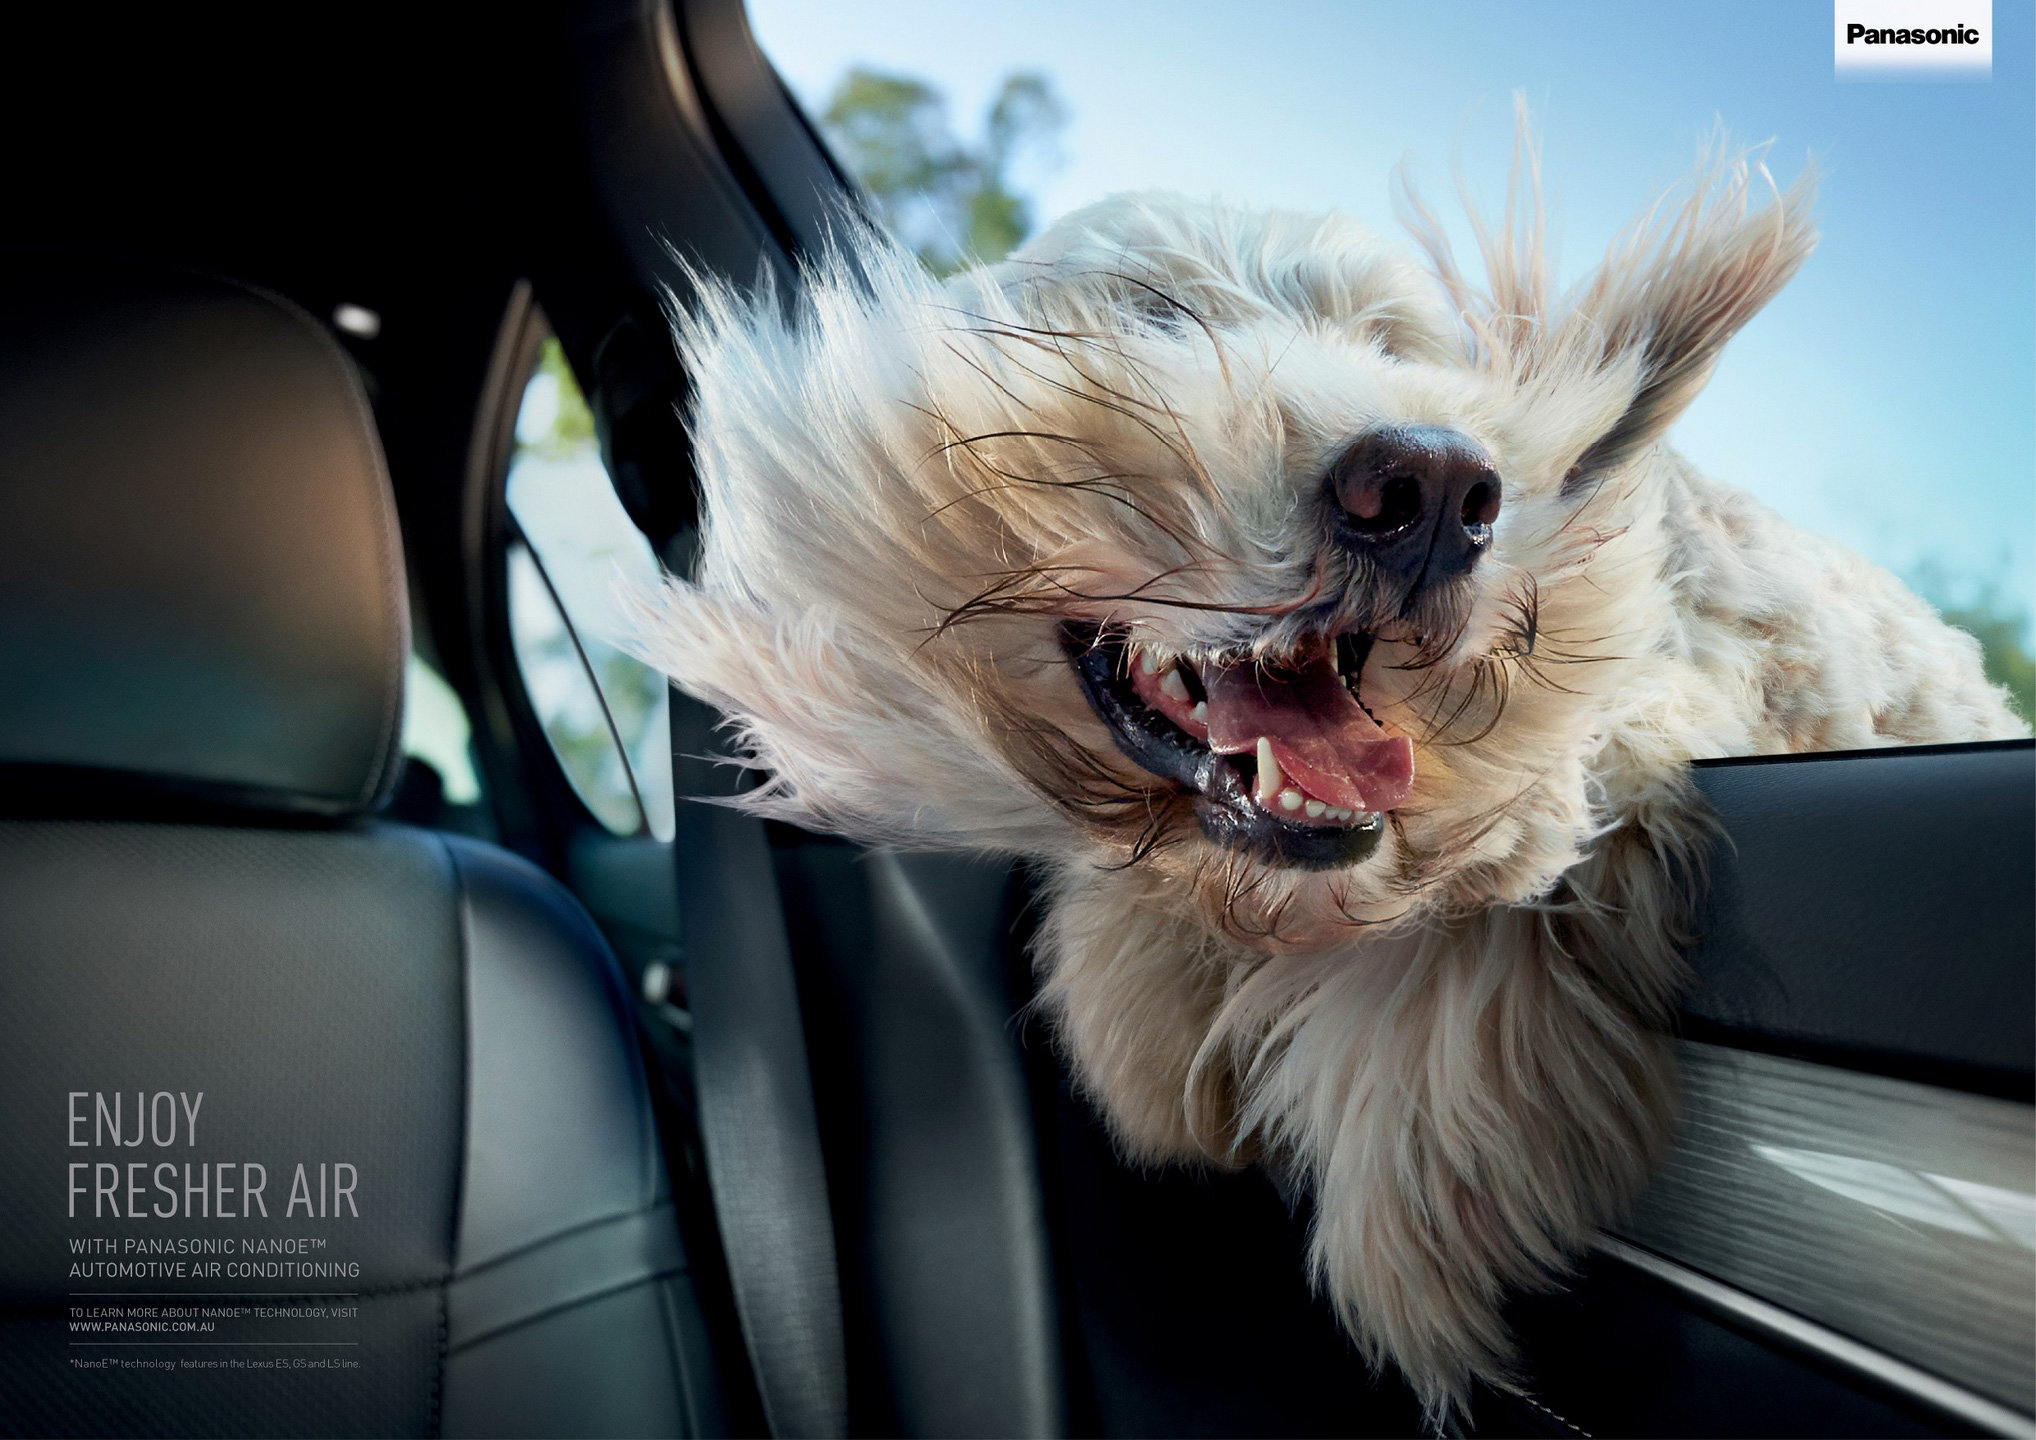 Panasonic Outdoor Advert By Saatchi & Saatchi: Windblown dog | Ads ...